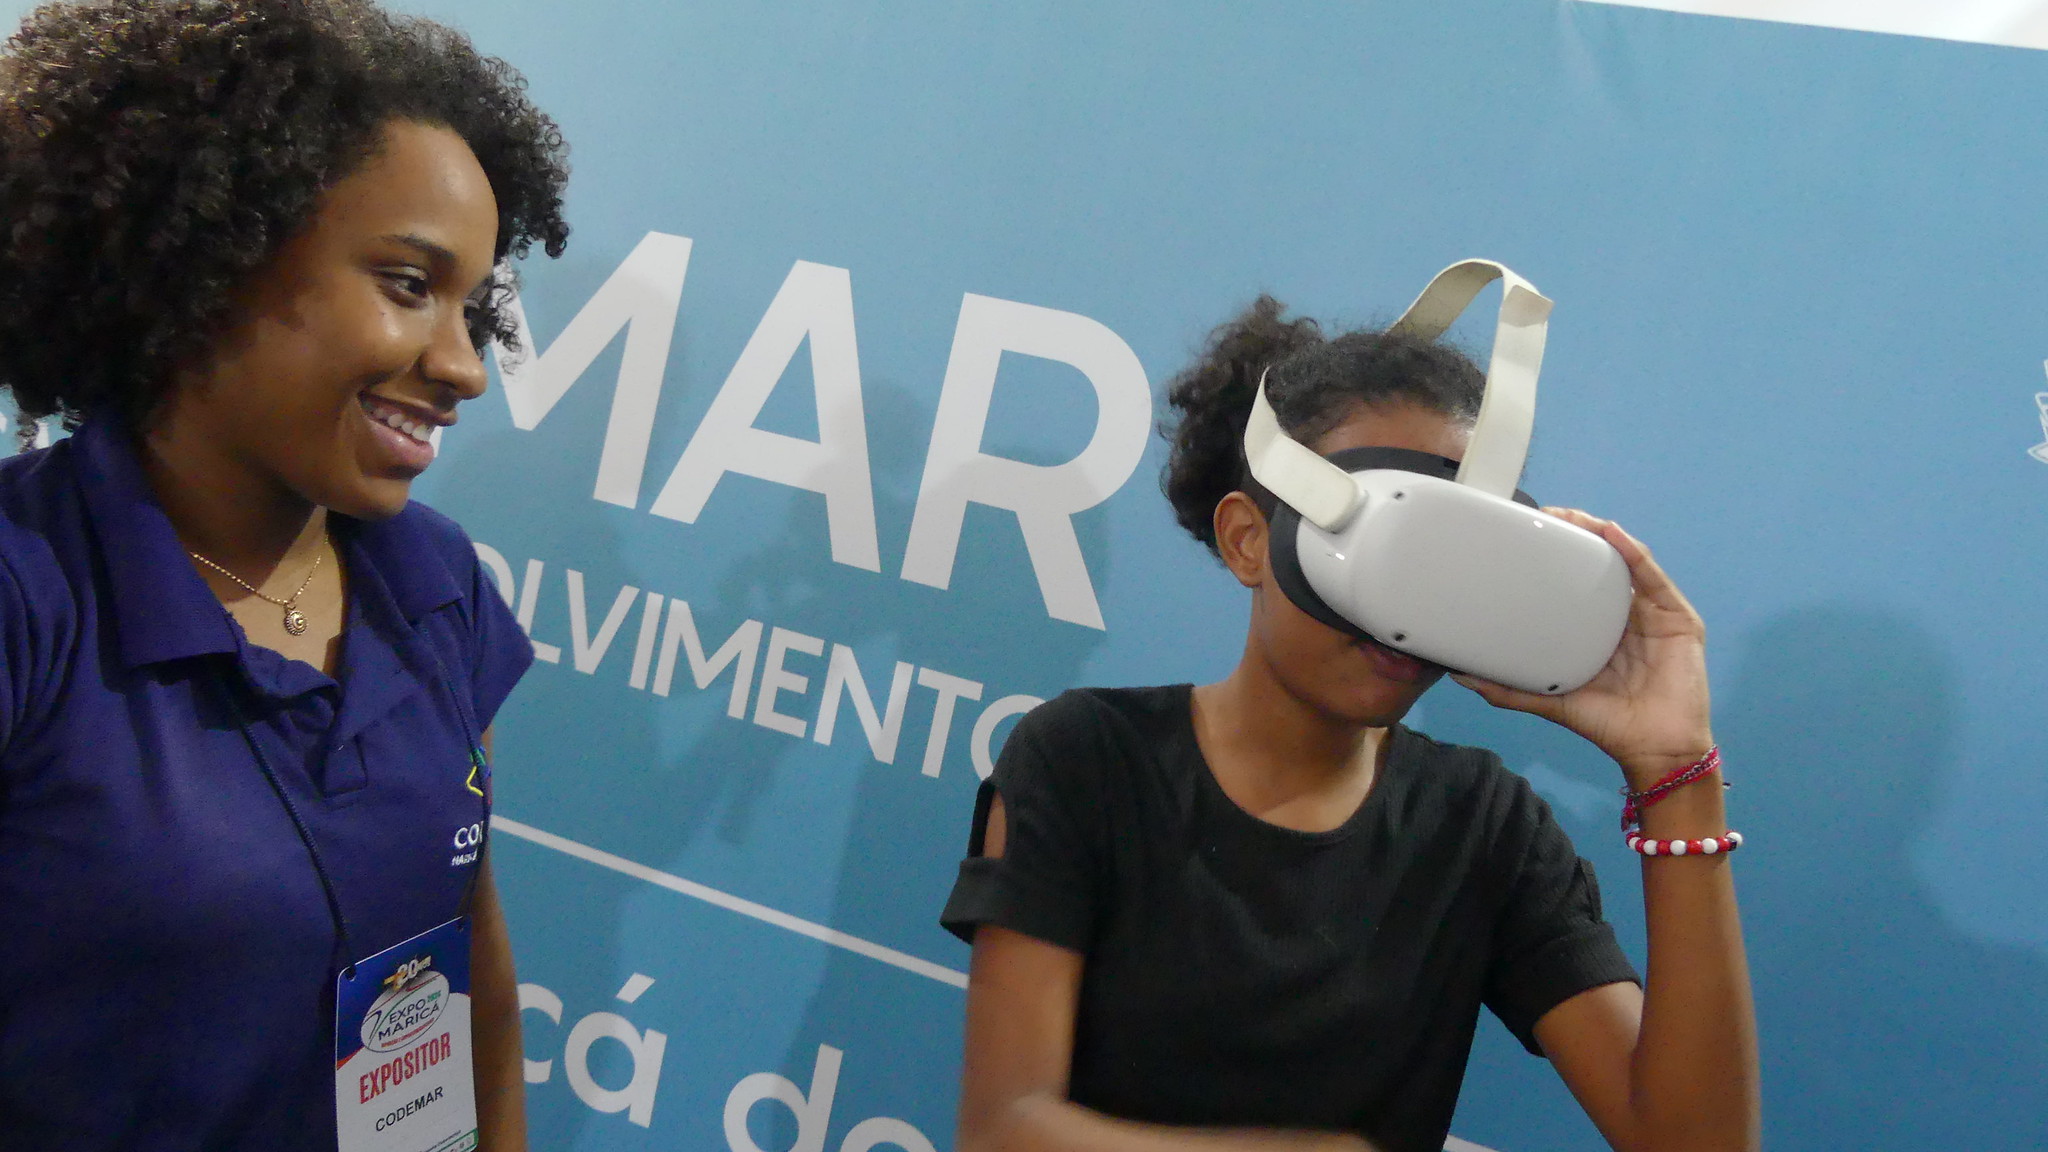 Estande da Codemar disponibiliza óculos de realidade virtual com projetos da companhia